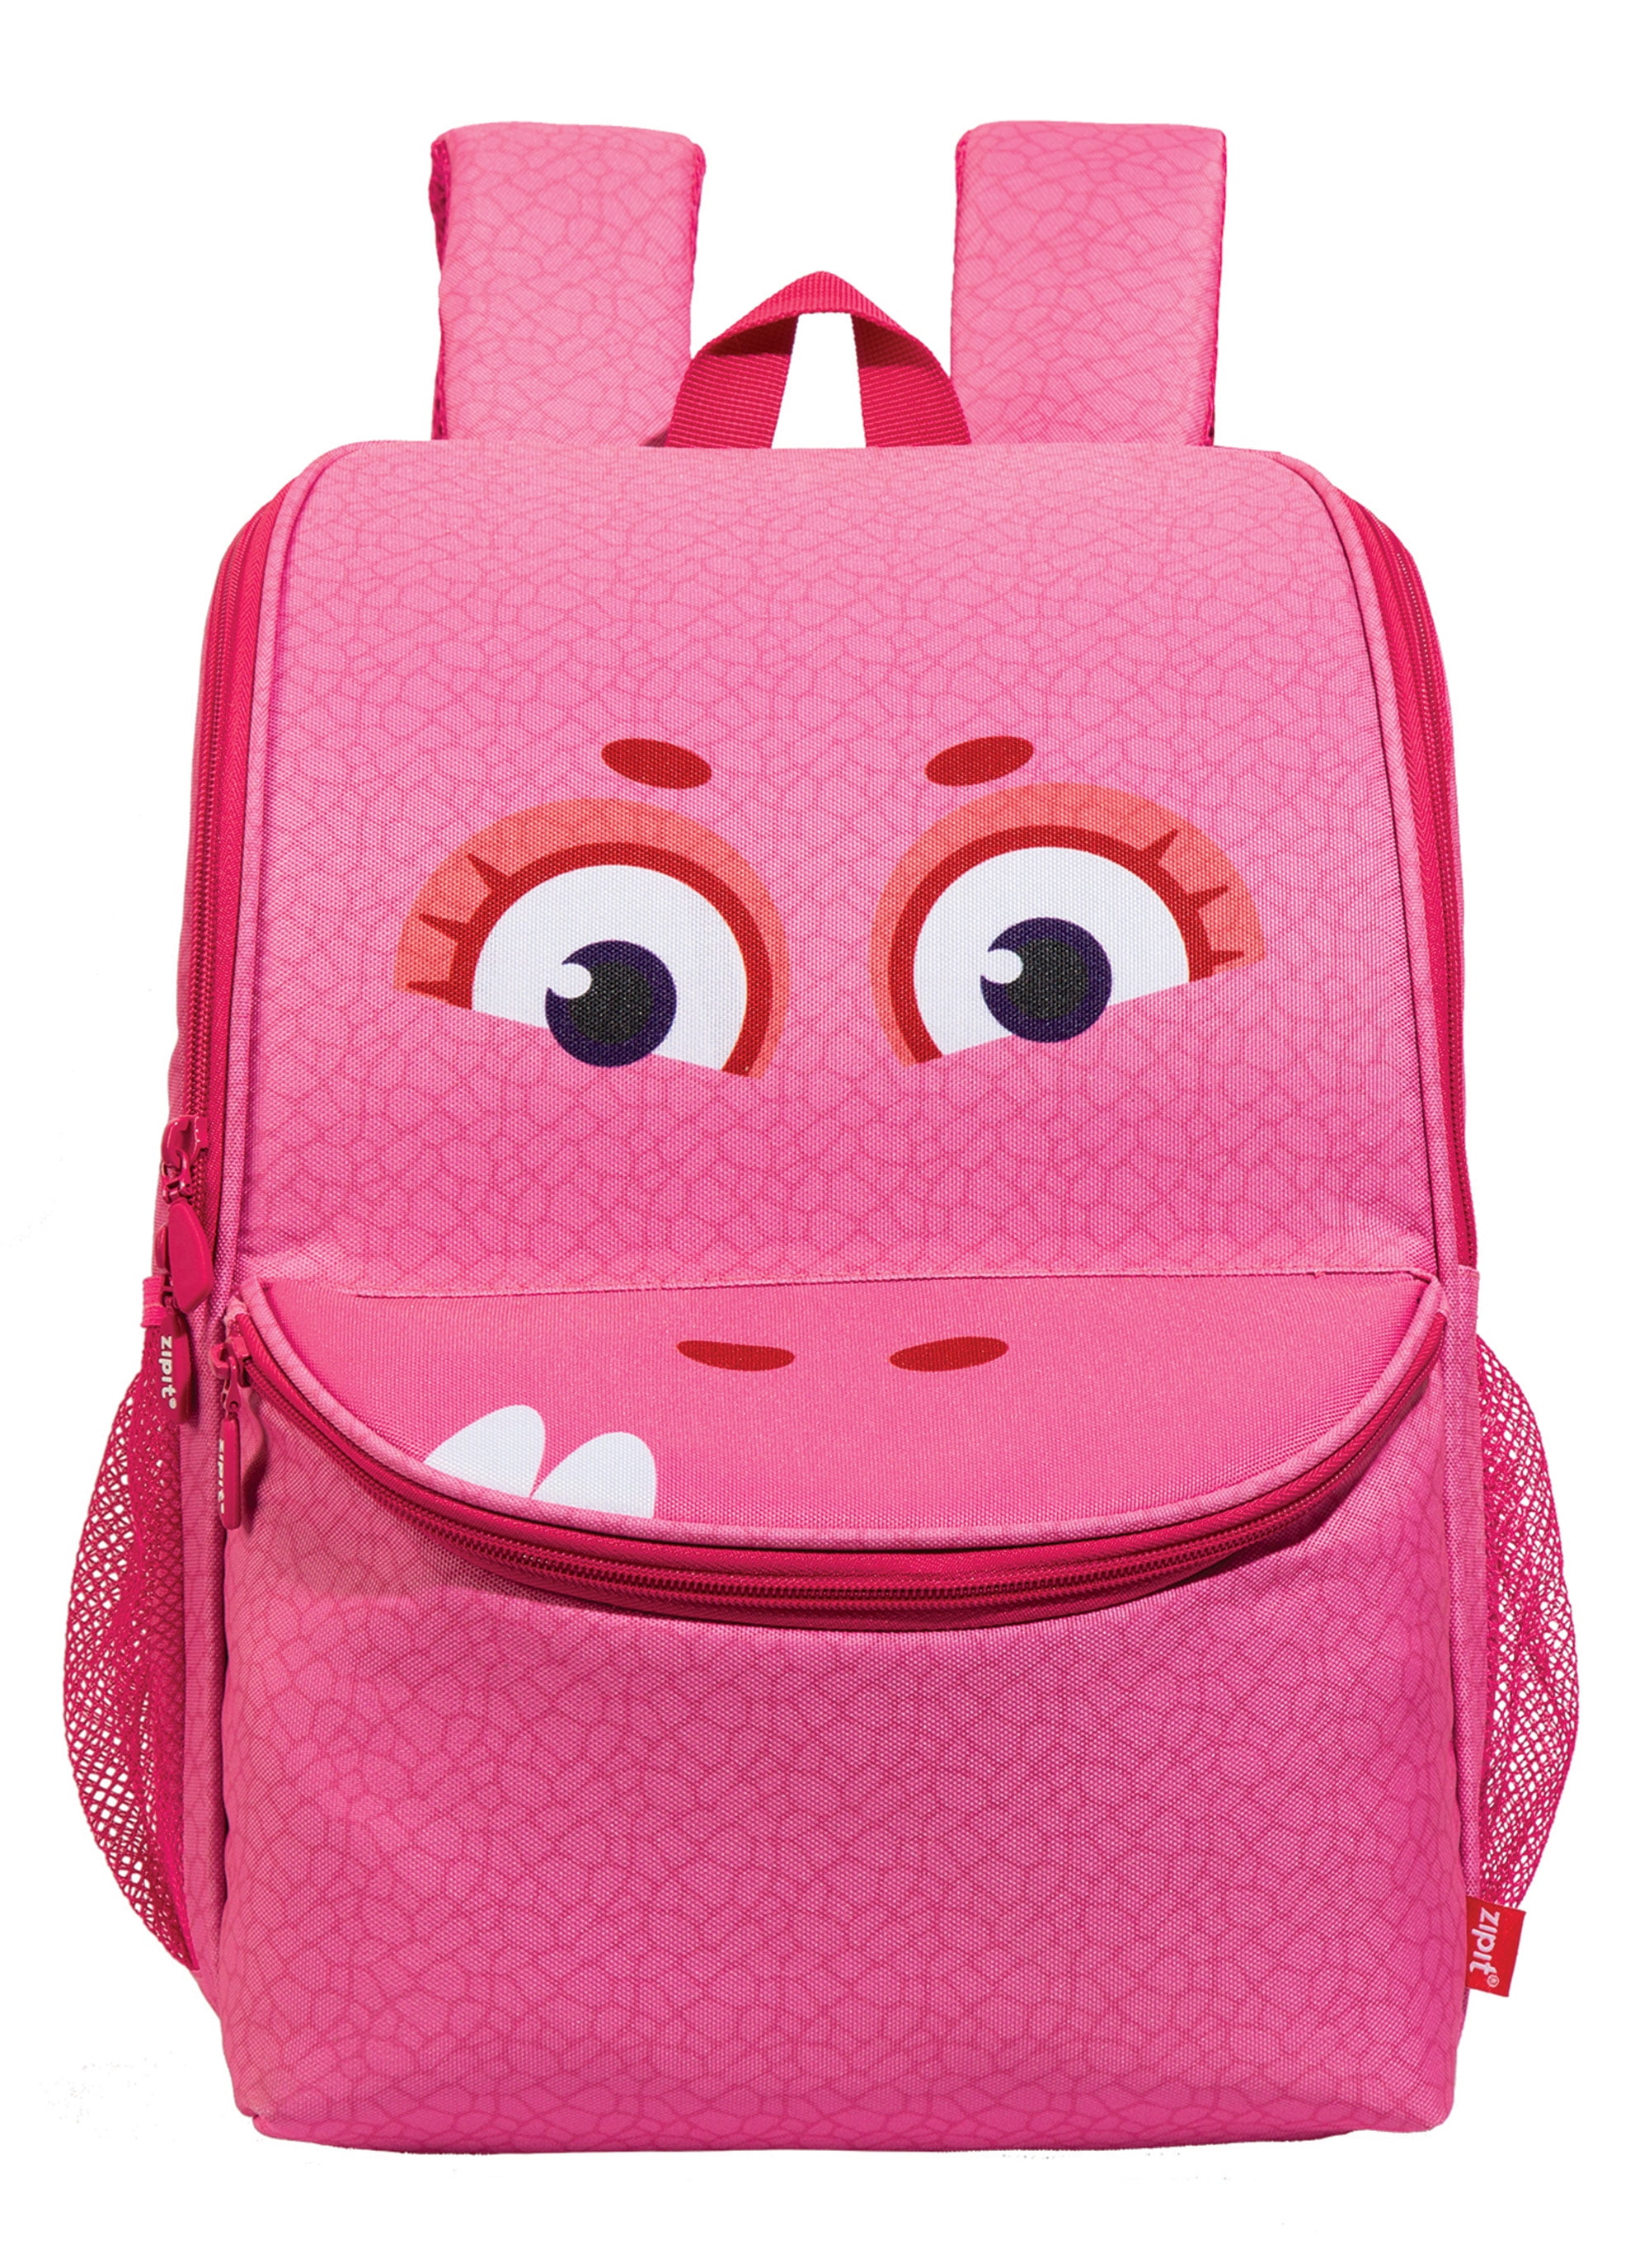 Funny Backpack Girls School Bag PREMIUM Rucksack Travel Work Smile Pink FACES 